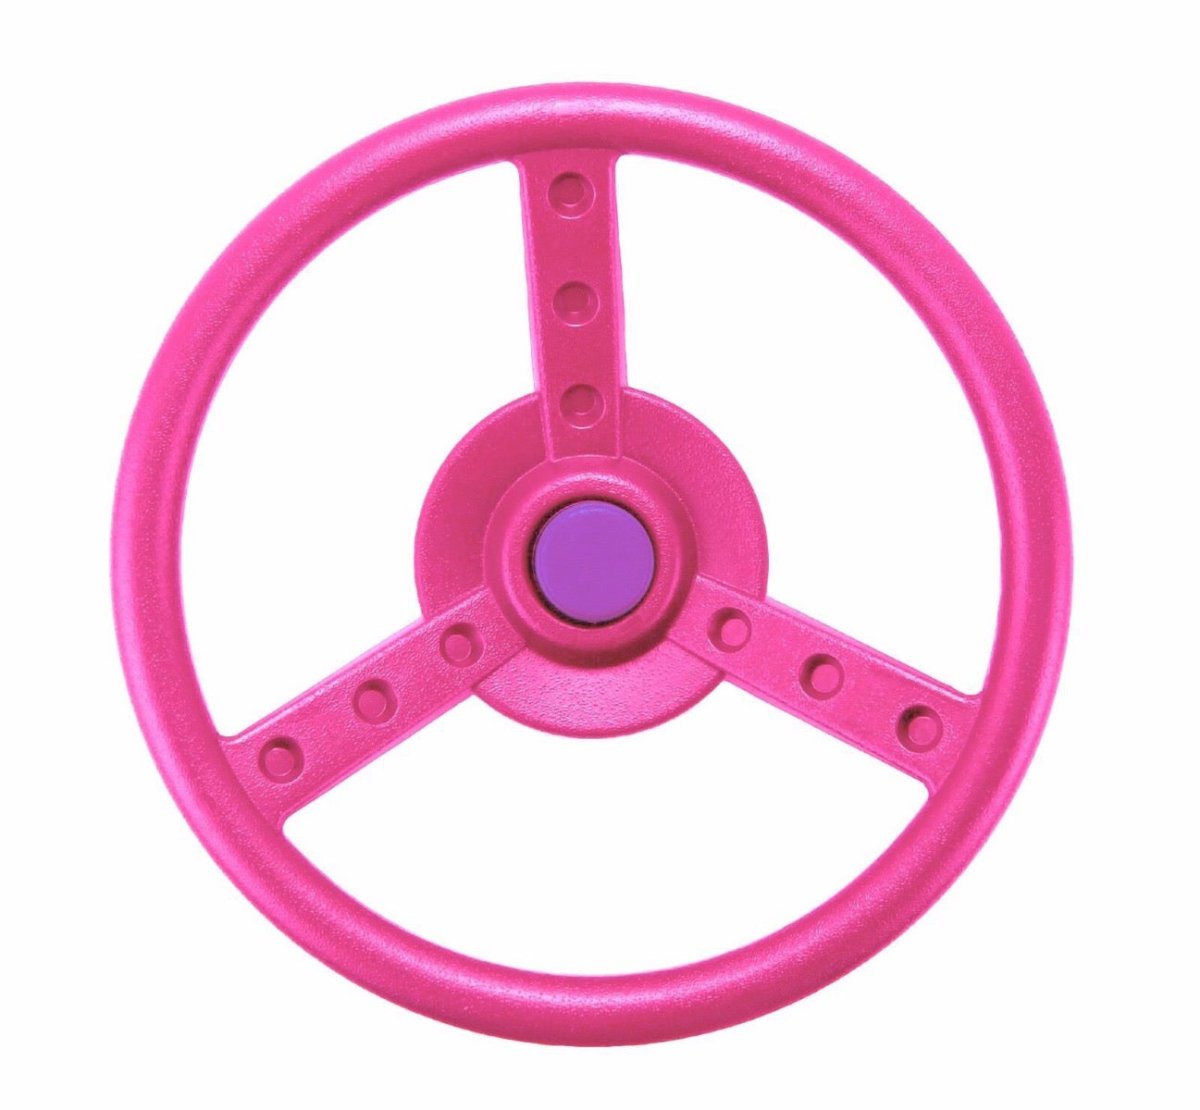 Rebo Garden Climbing Frame Accessories Plastic Steering Wheel - Pink